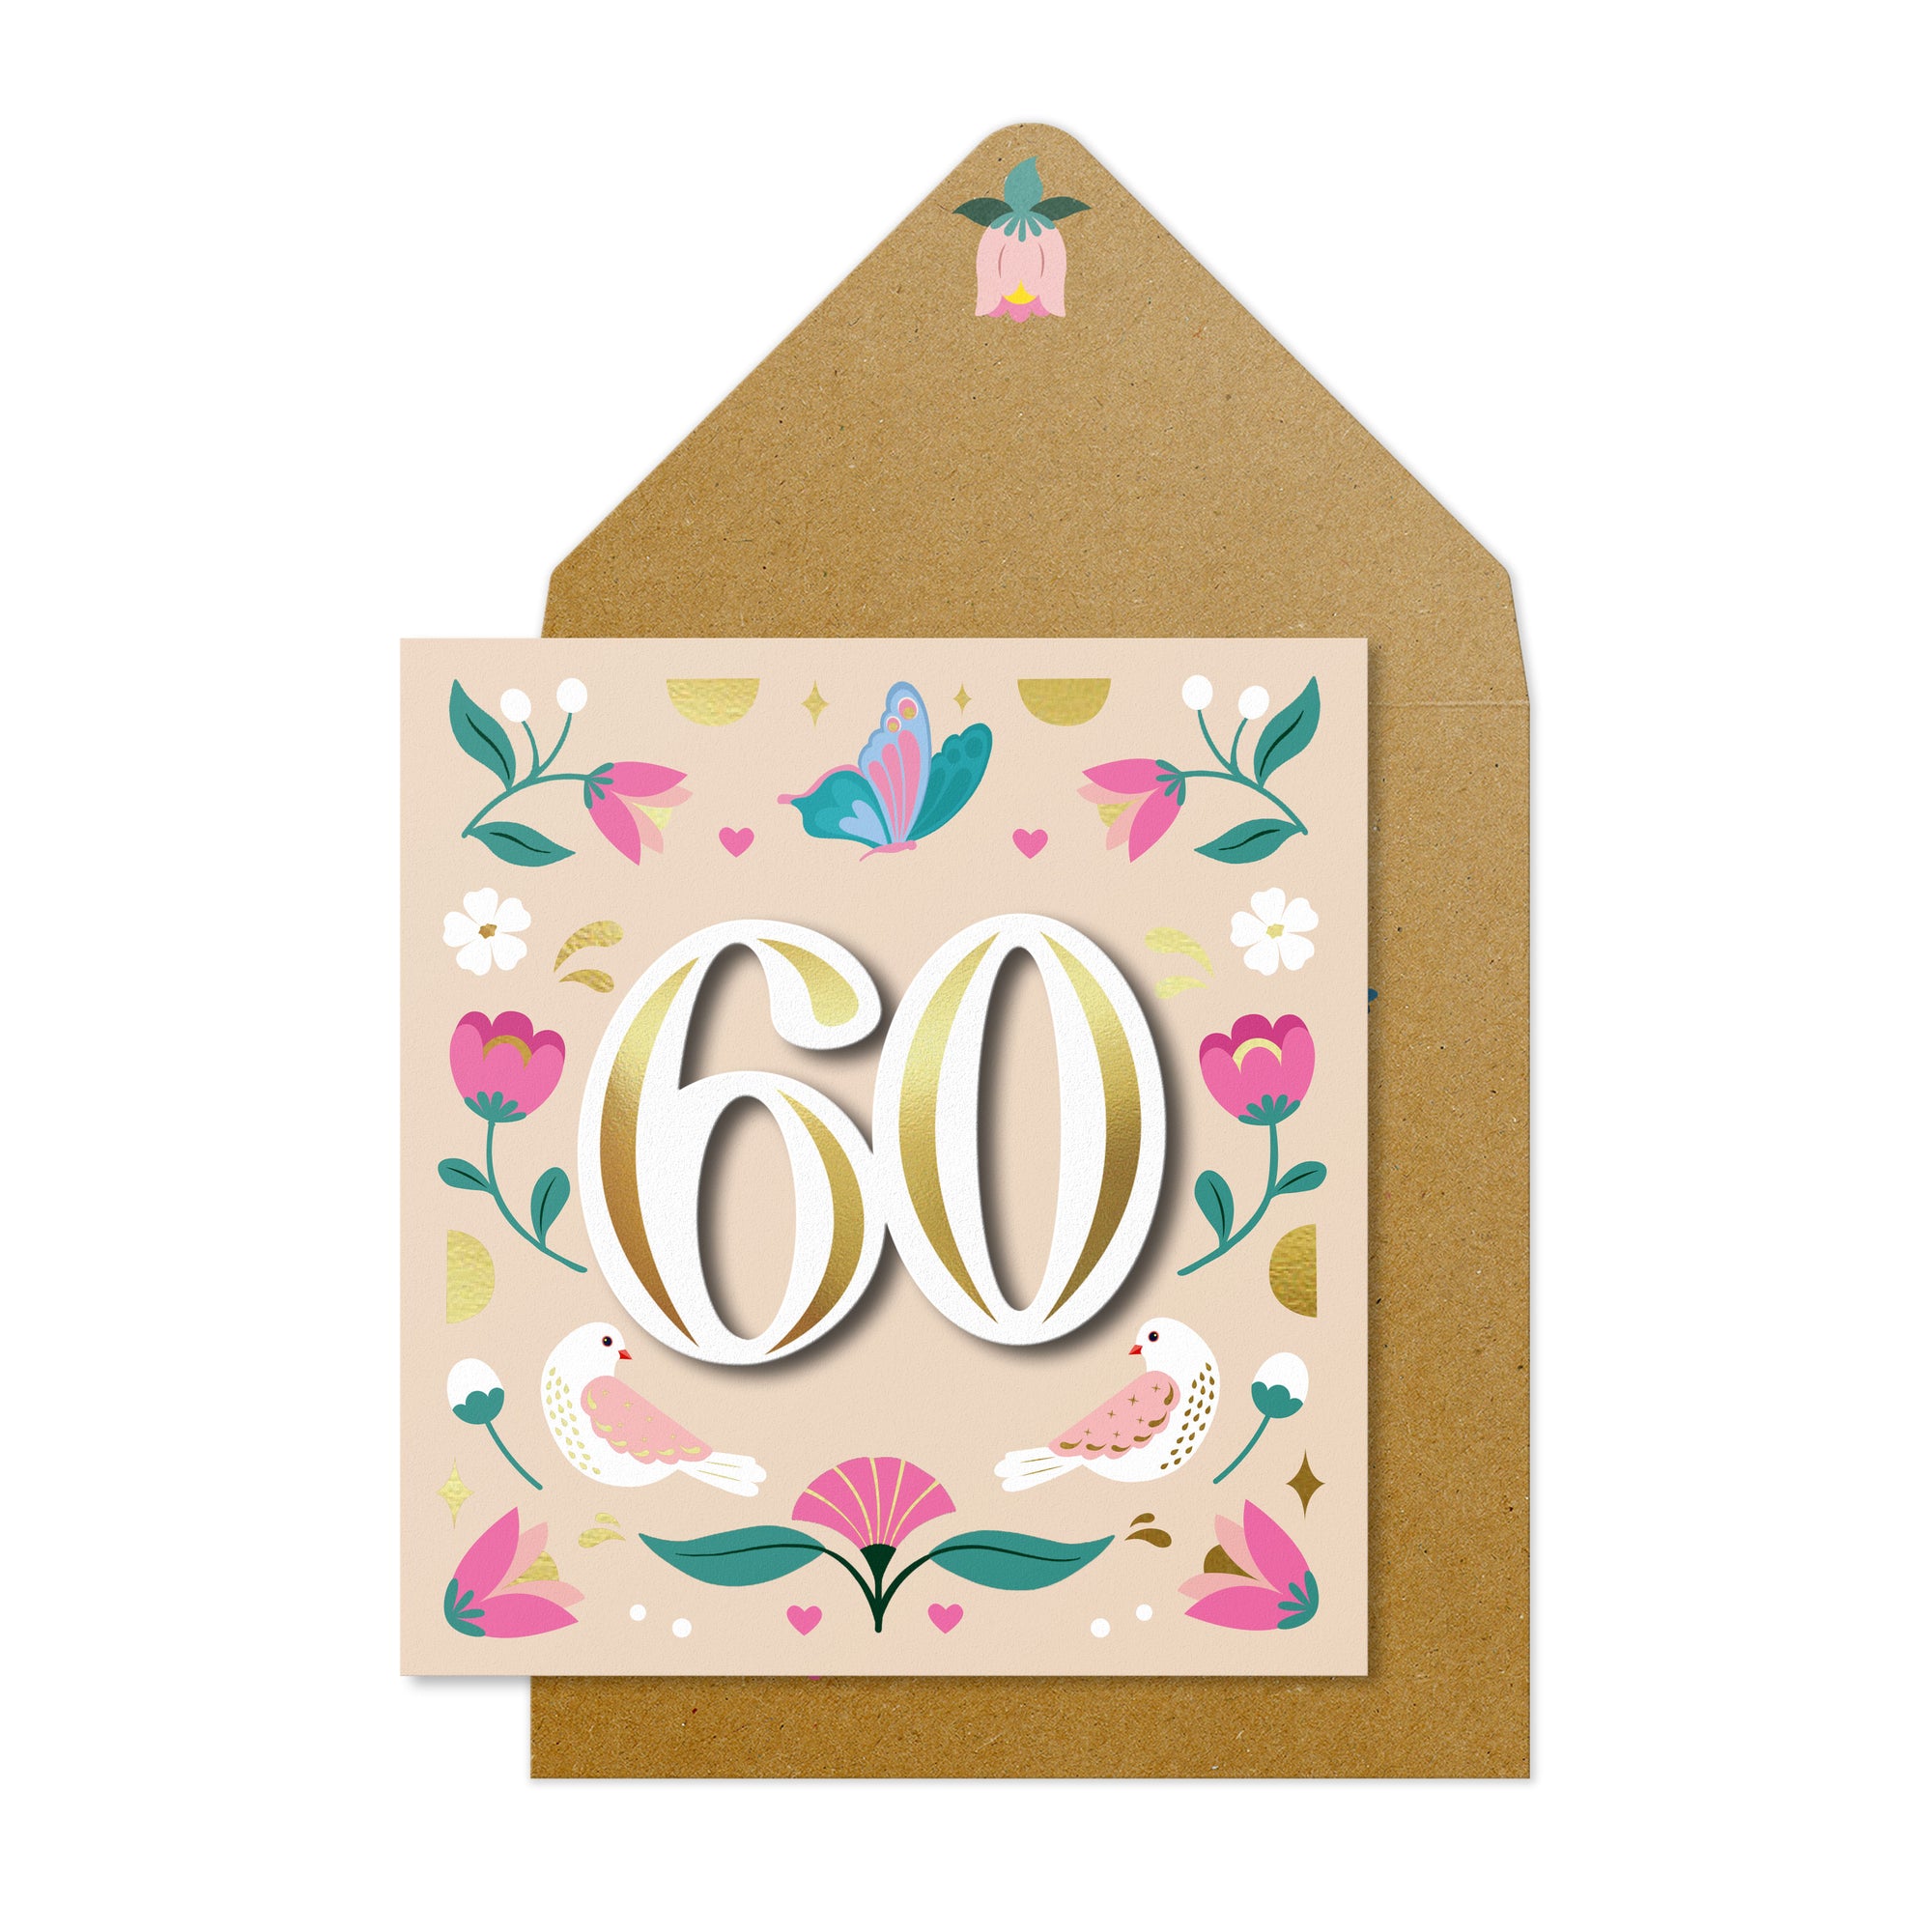 Floral Happy Birthday - 60